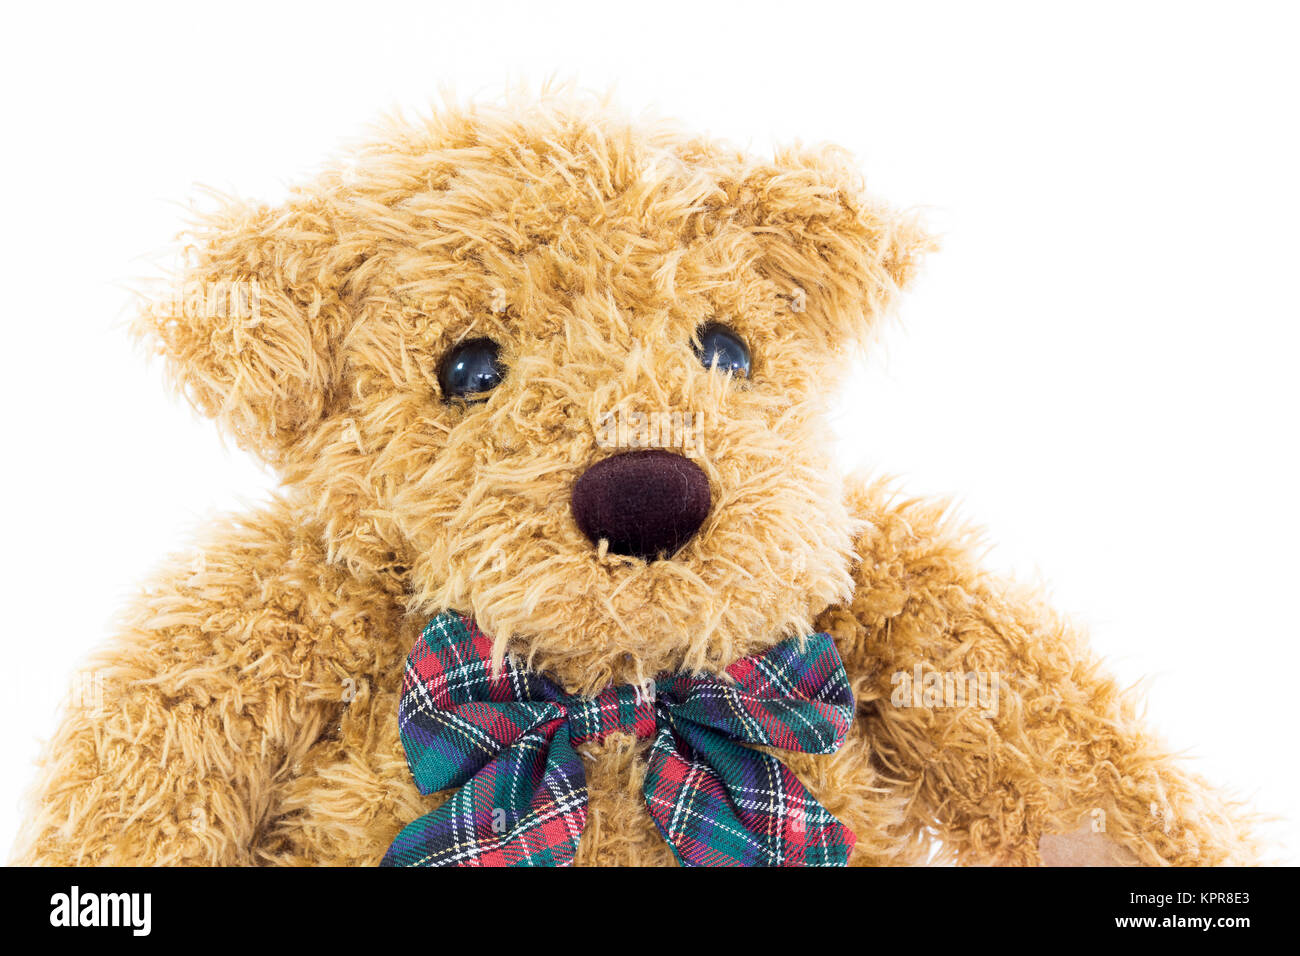 Close up teddy bear portrait on white Stock Photo